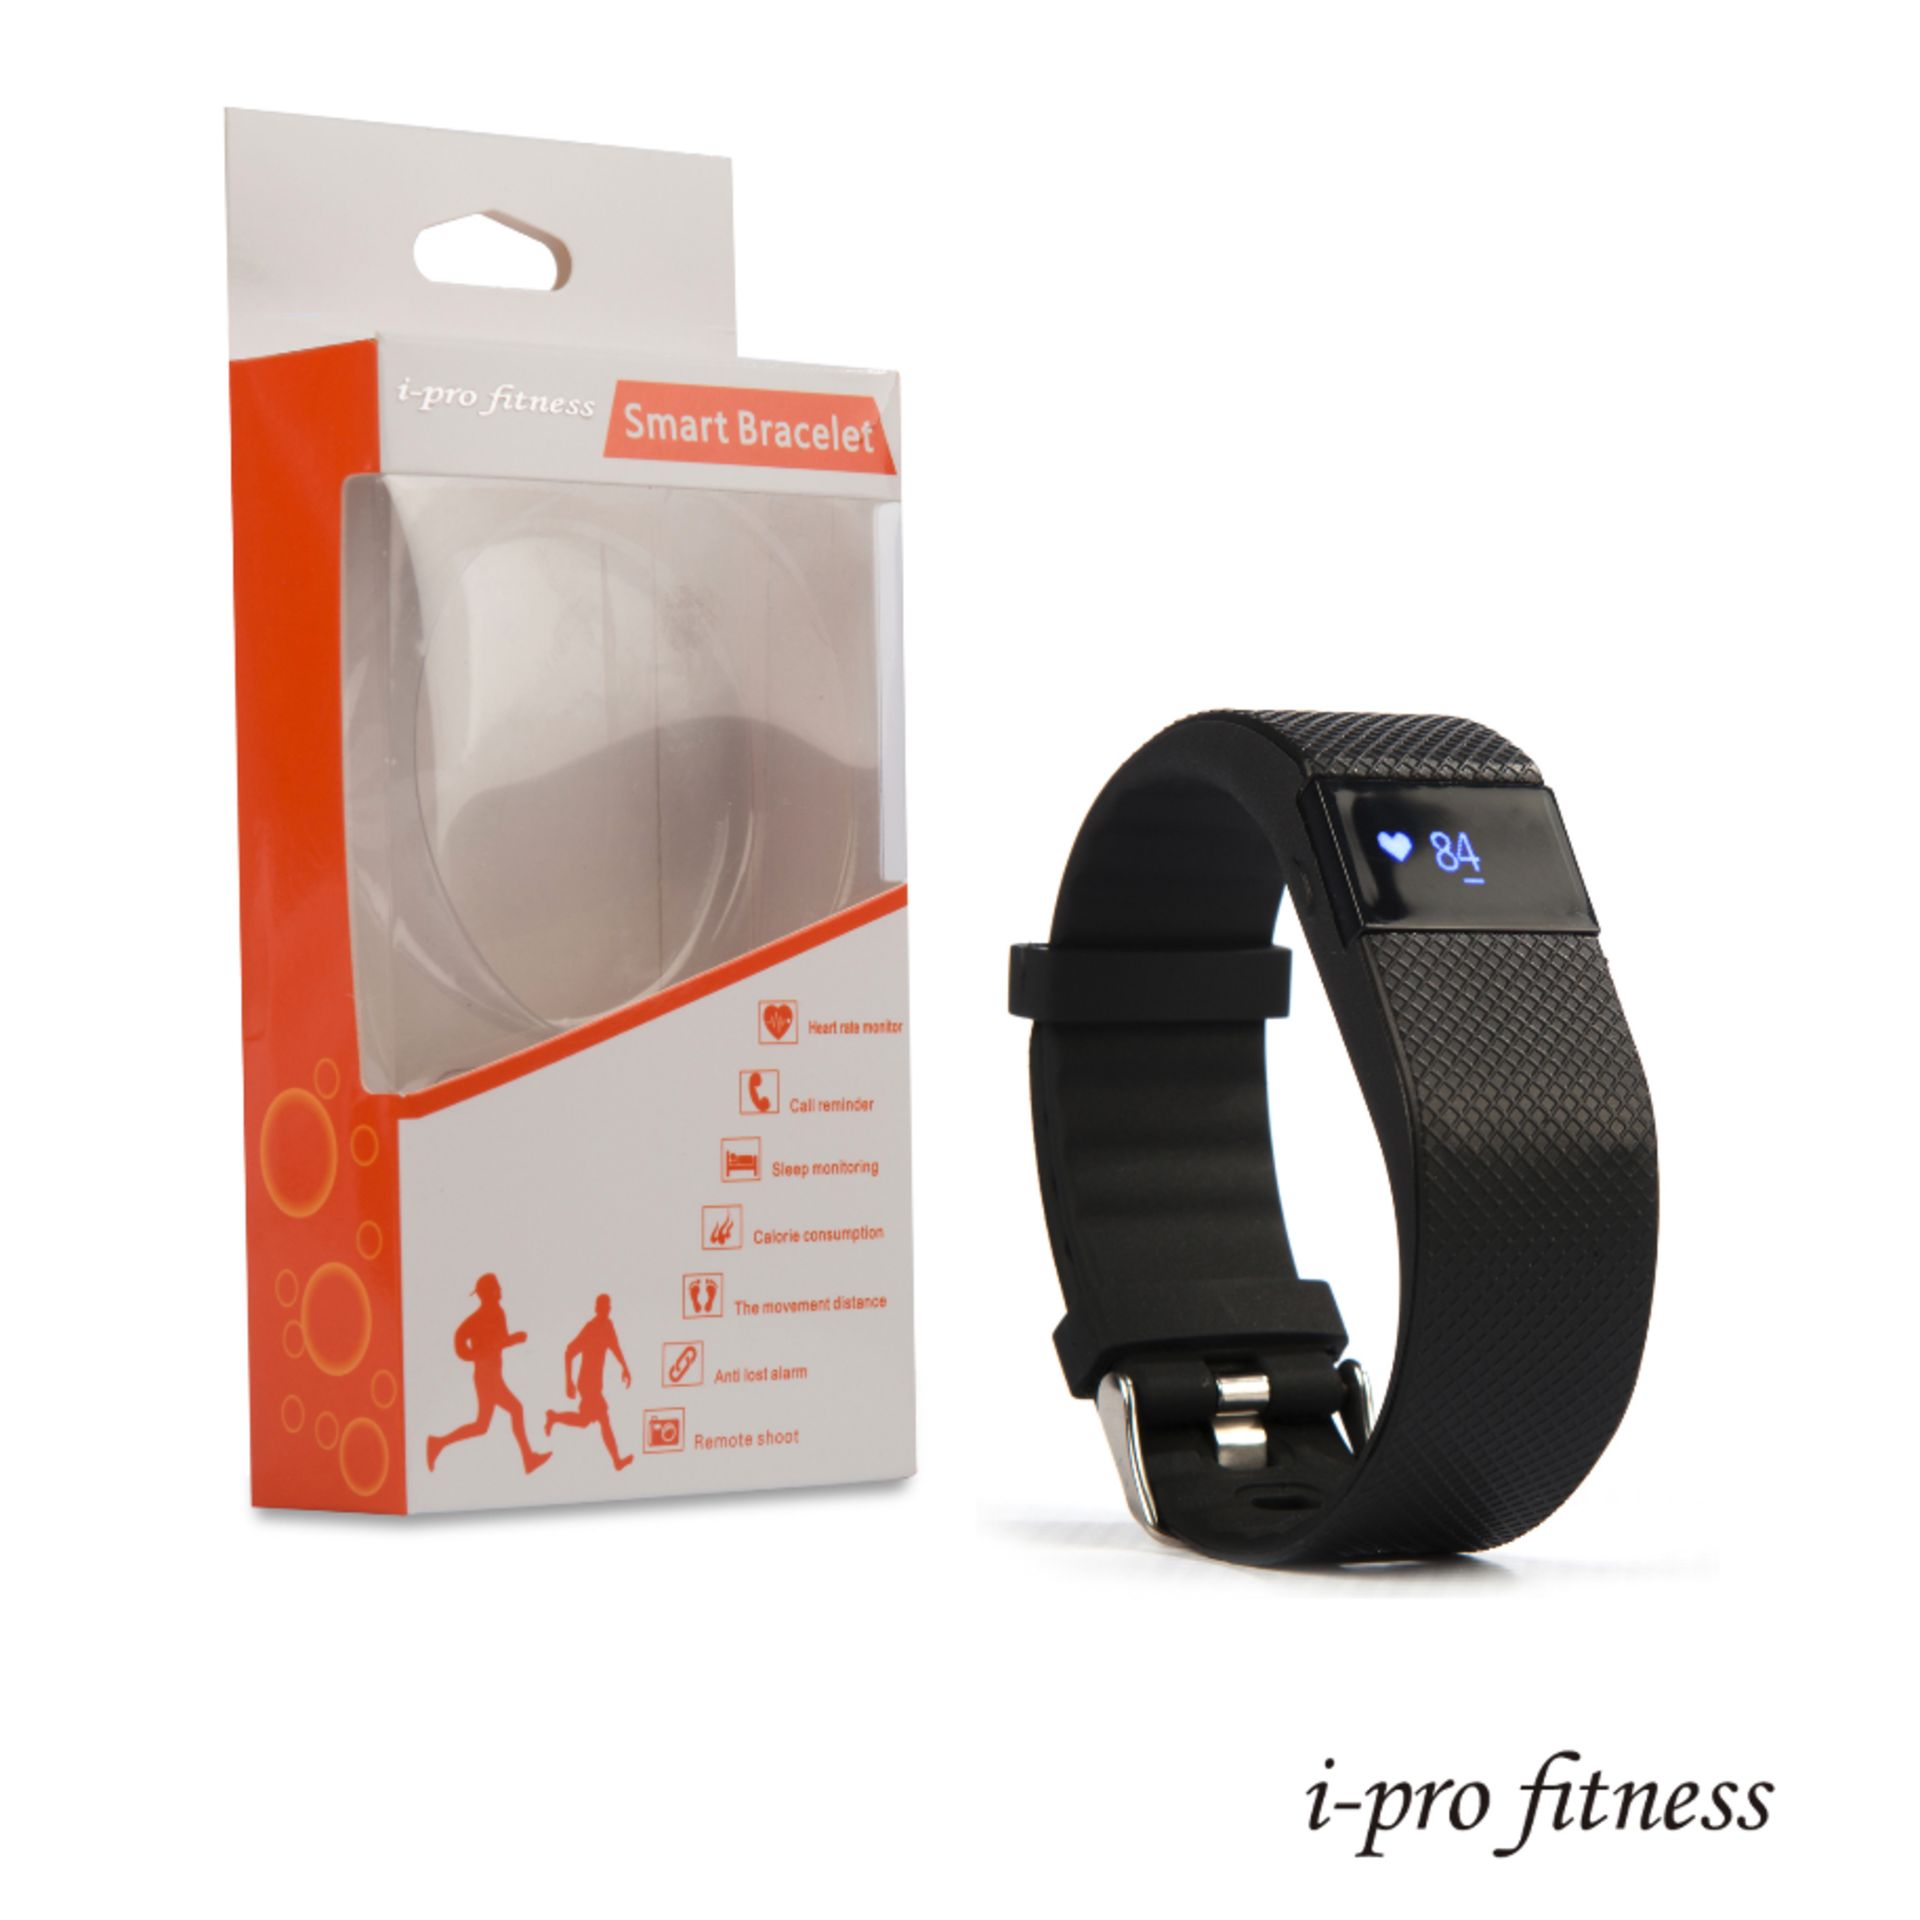 ***Trade lot 50 x Units Fitness Tracker i-pro fitness, Bluetooth 4.0 Sports Smart Bracelet*** - Image 7 of 8